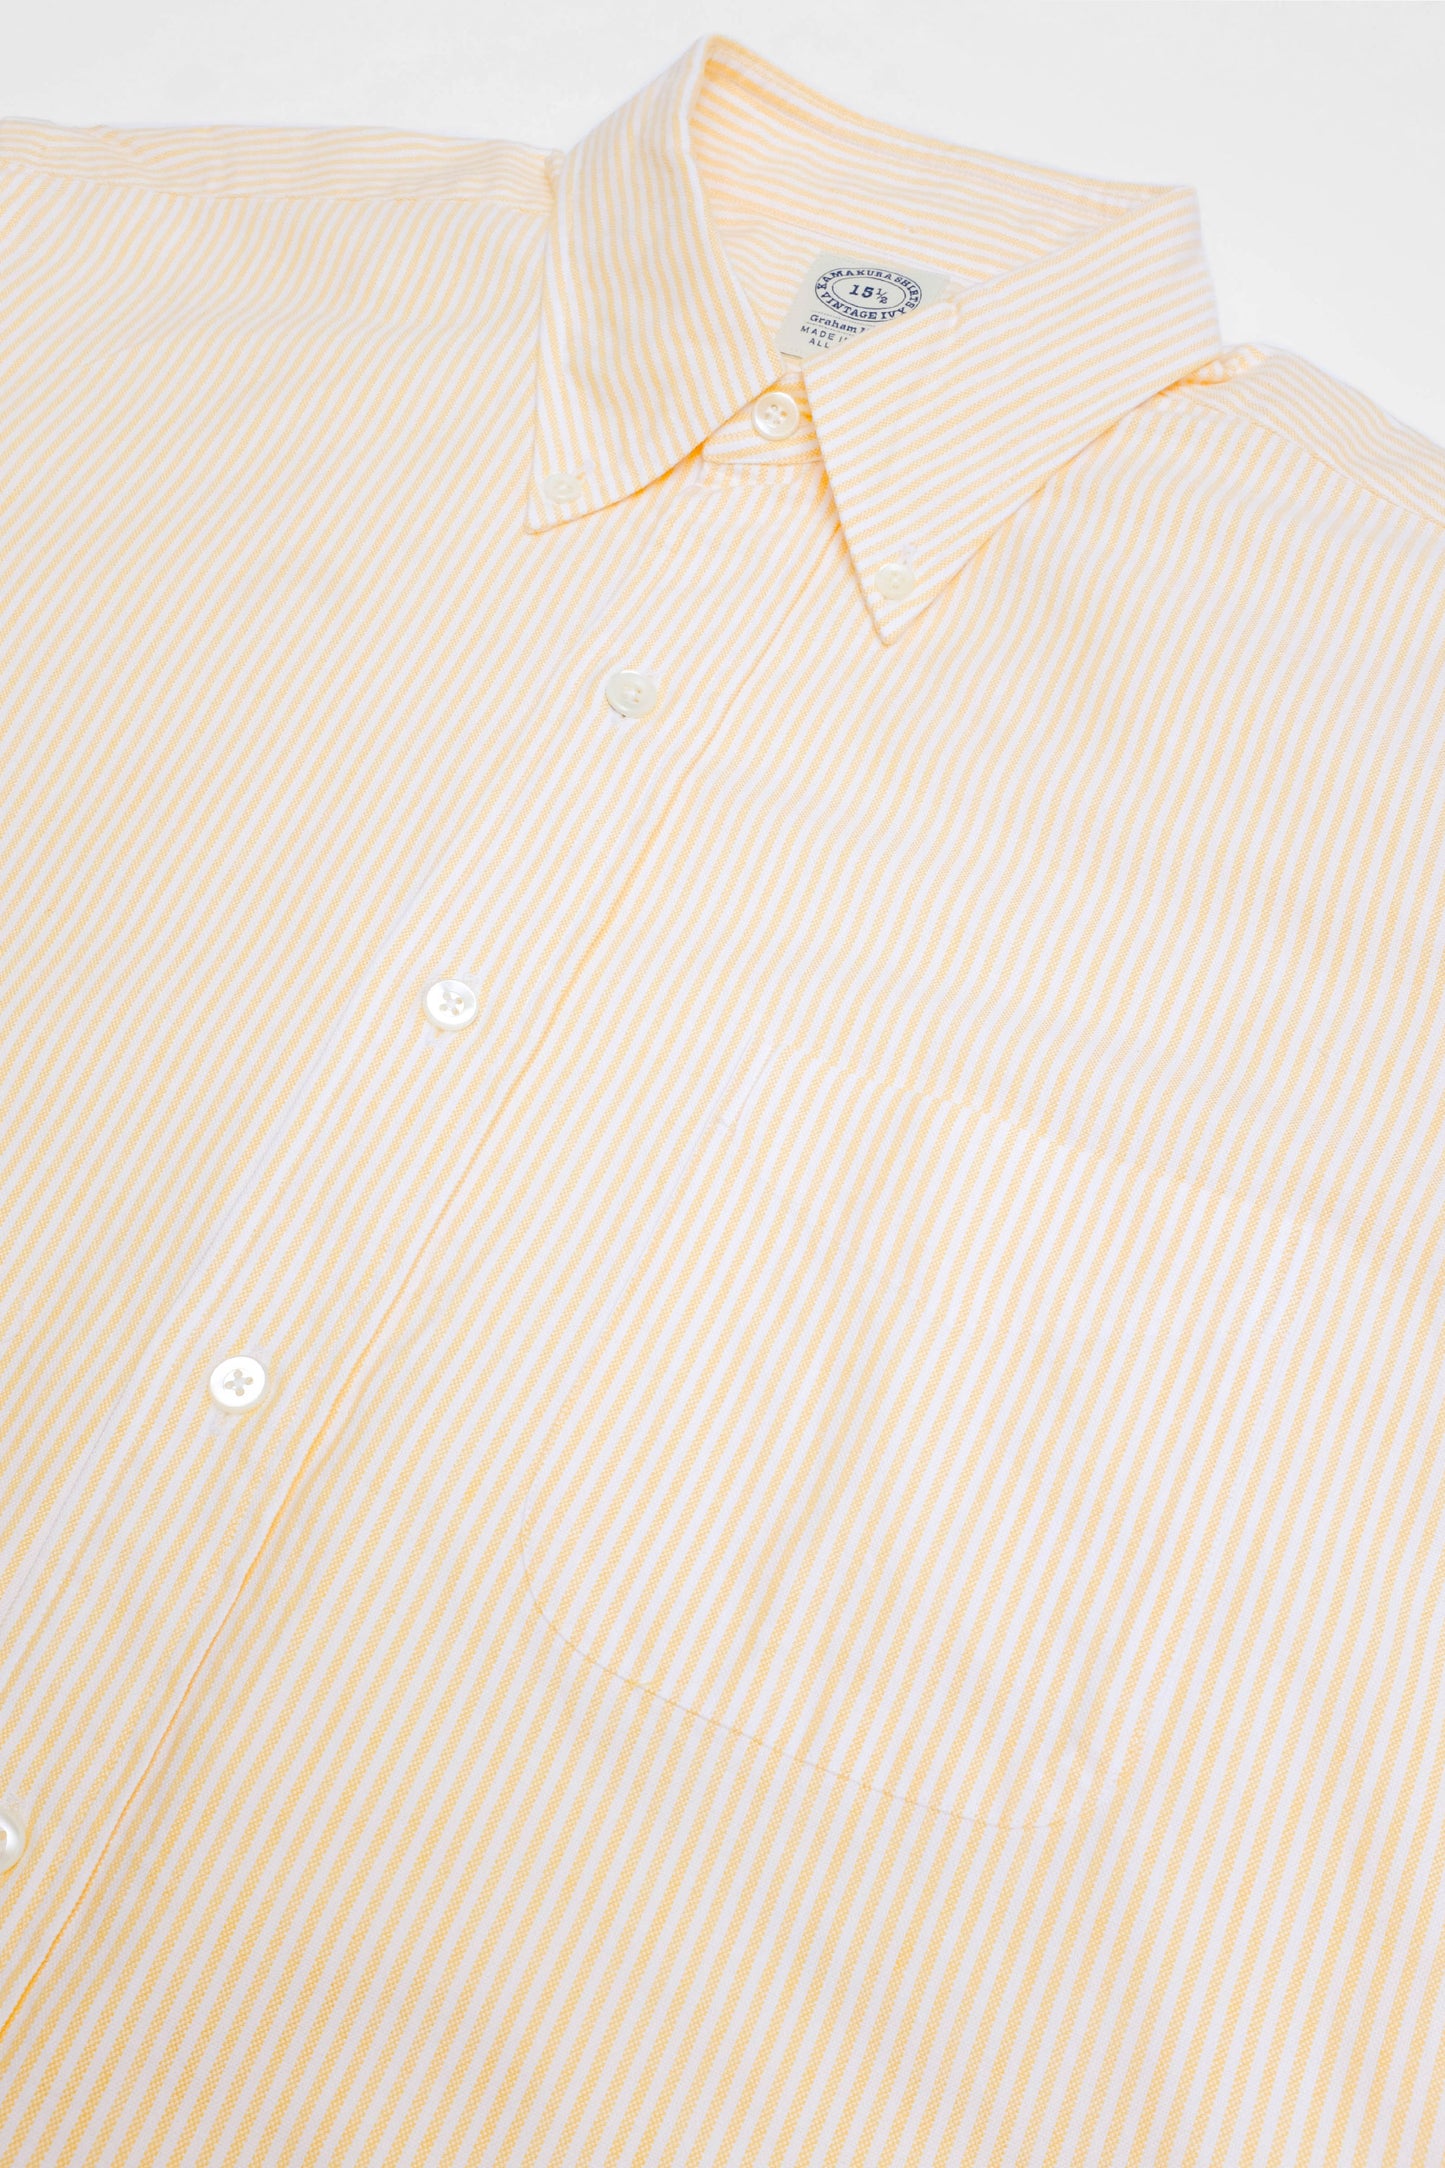 Vintage Ivy' Oxford Shirt - Yellow Stripes